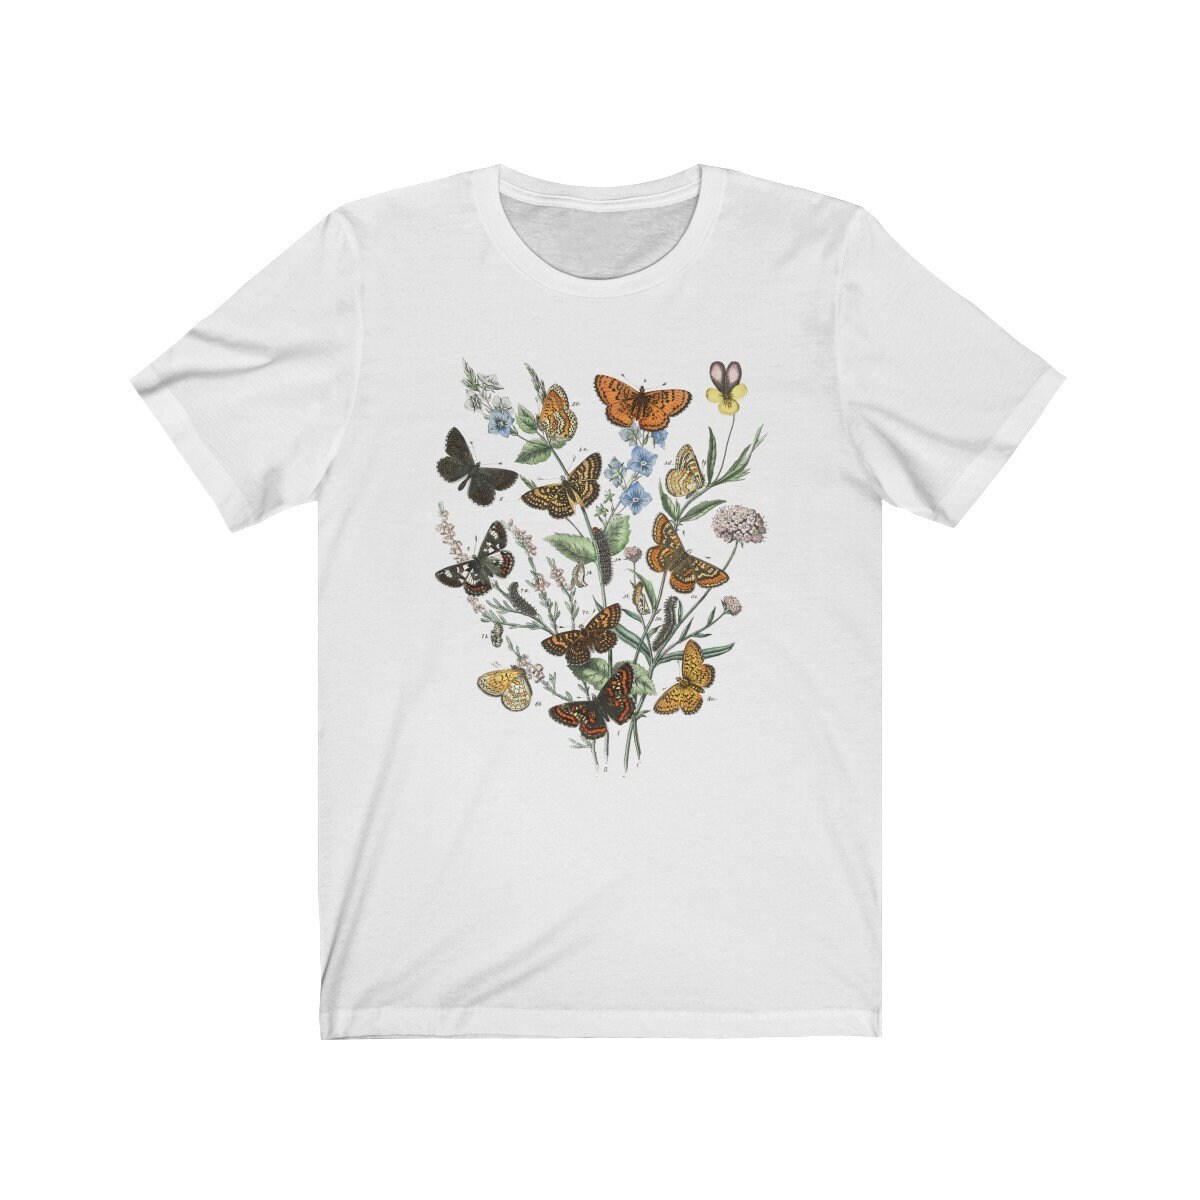 Butterfly t-shirt botanical shirt botanical t-shirt vintage | Etsy